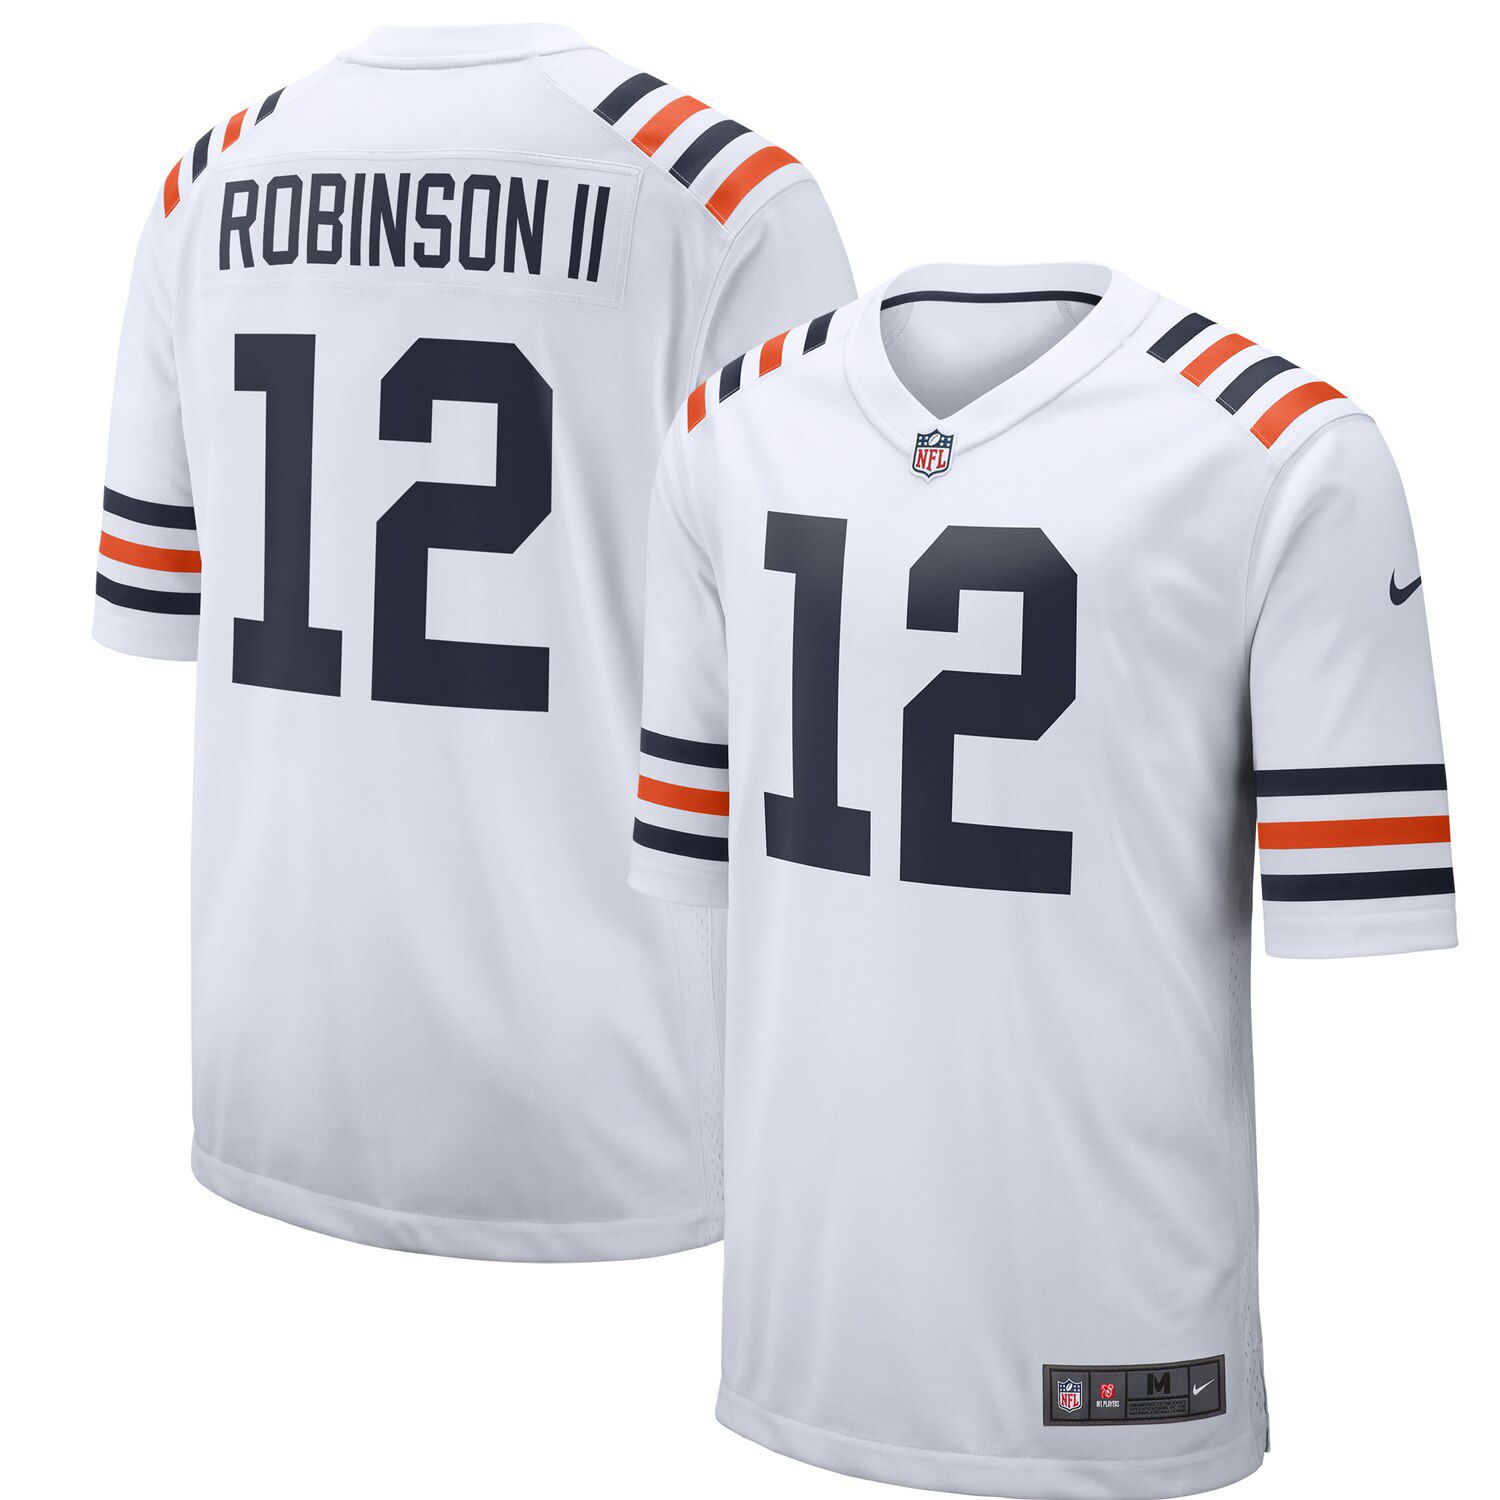 robinson bears jersey